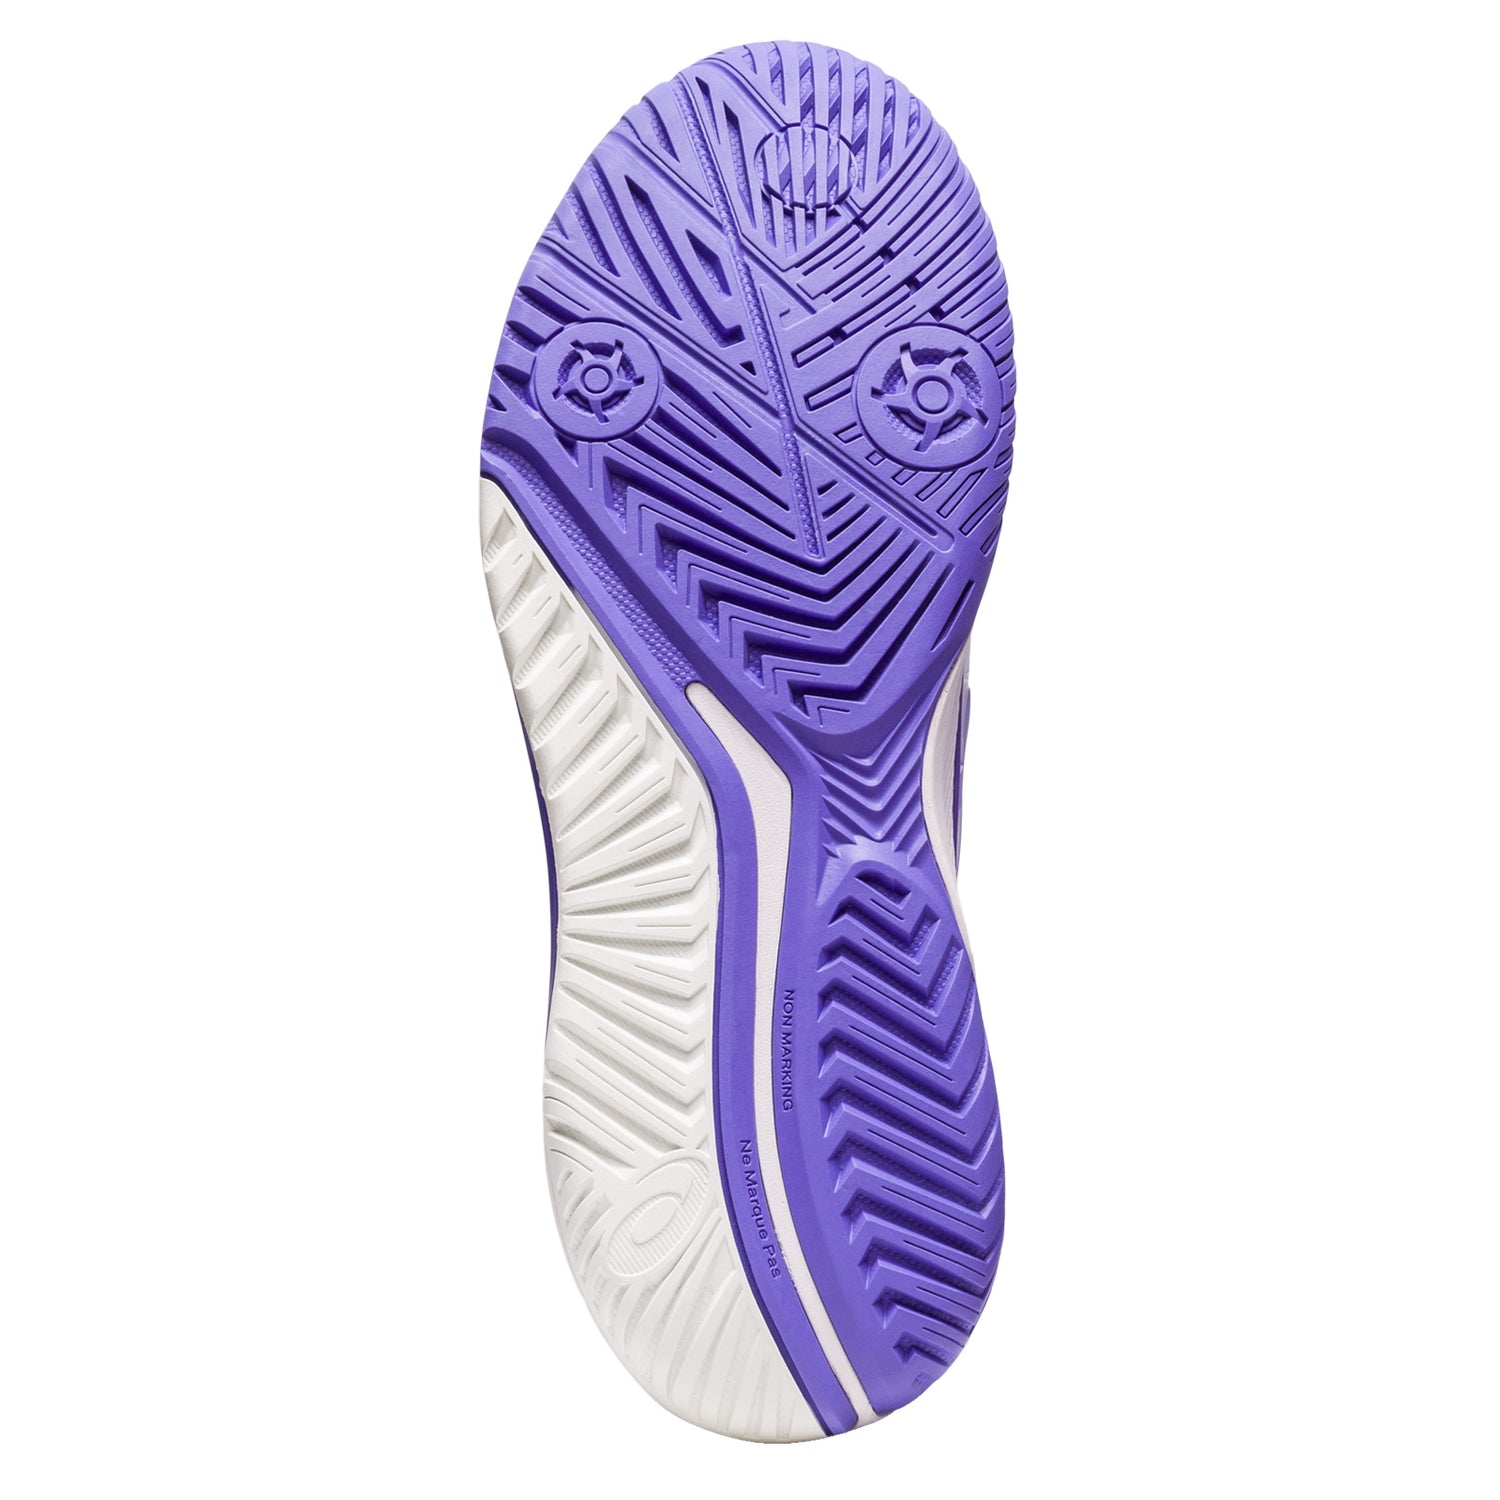 Peltz Shoes  Women's ASICS GEL-Resolution 9 Tennis Shoe - Wide Width WHITE/AMETHYST 1042A226-101